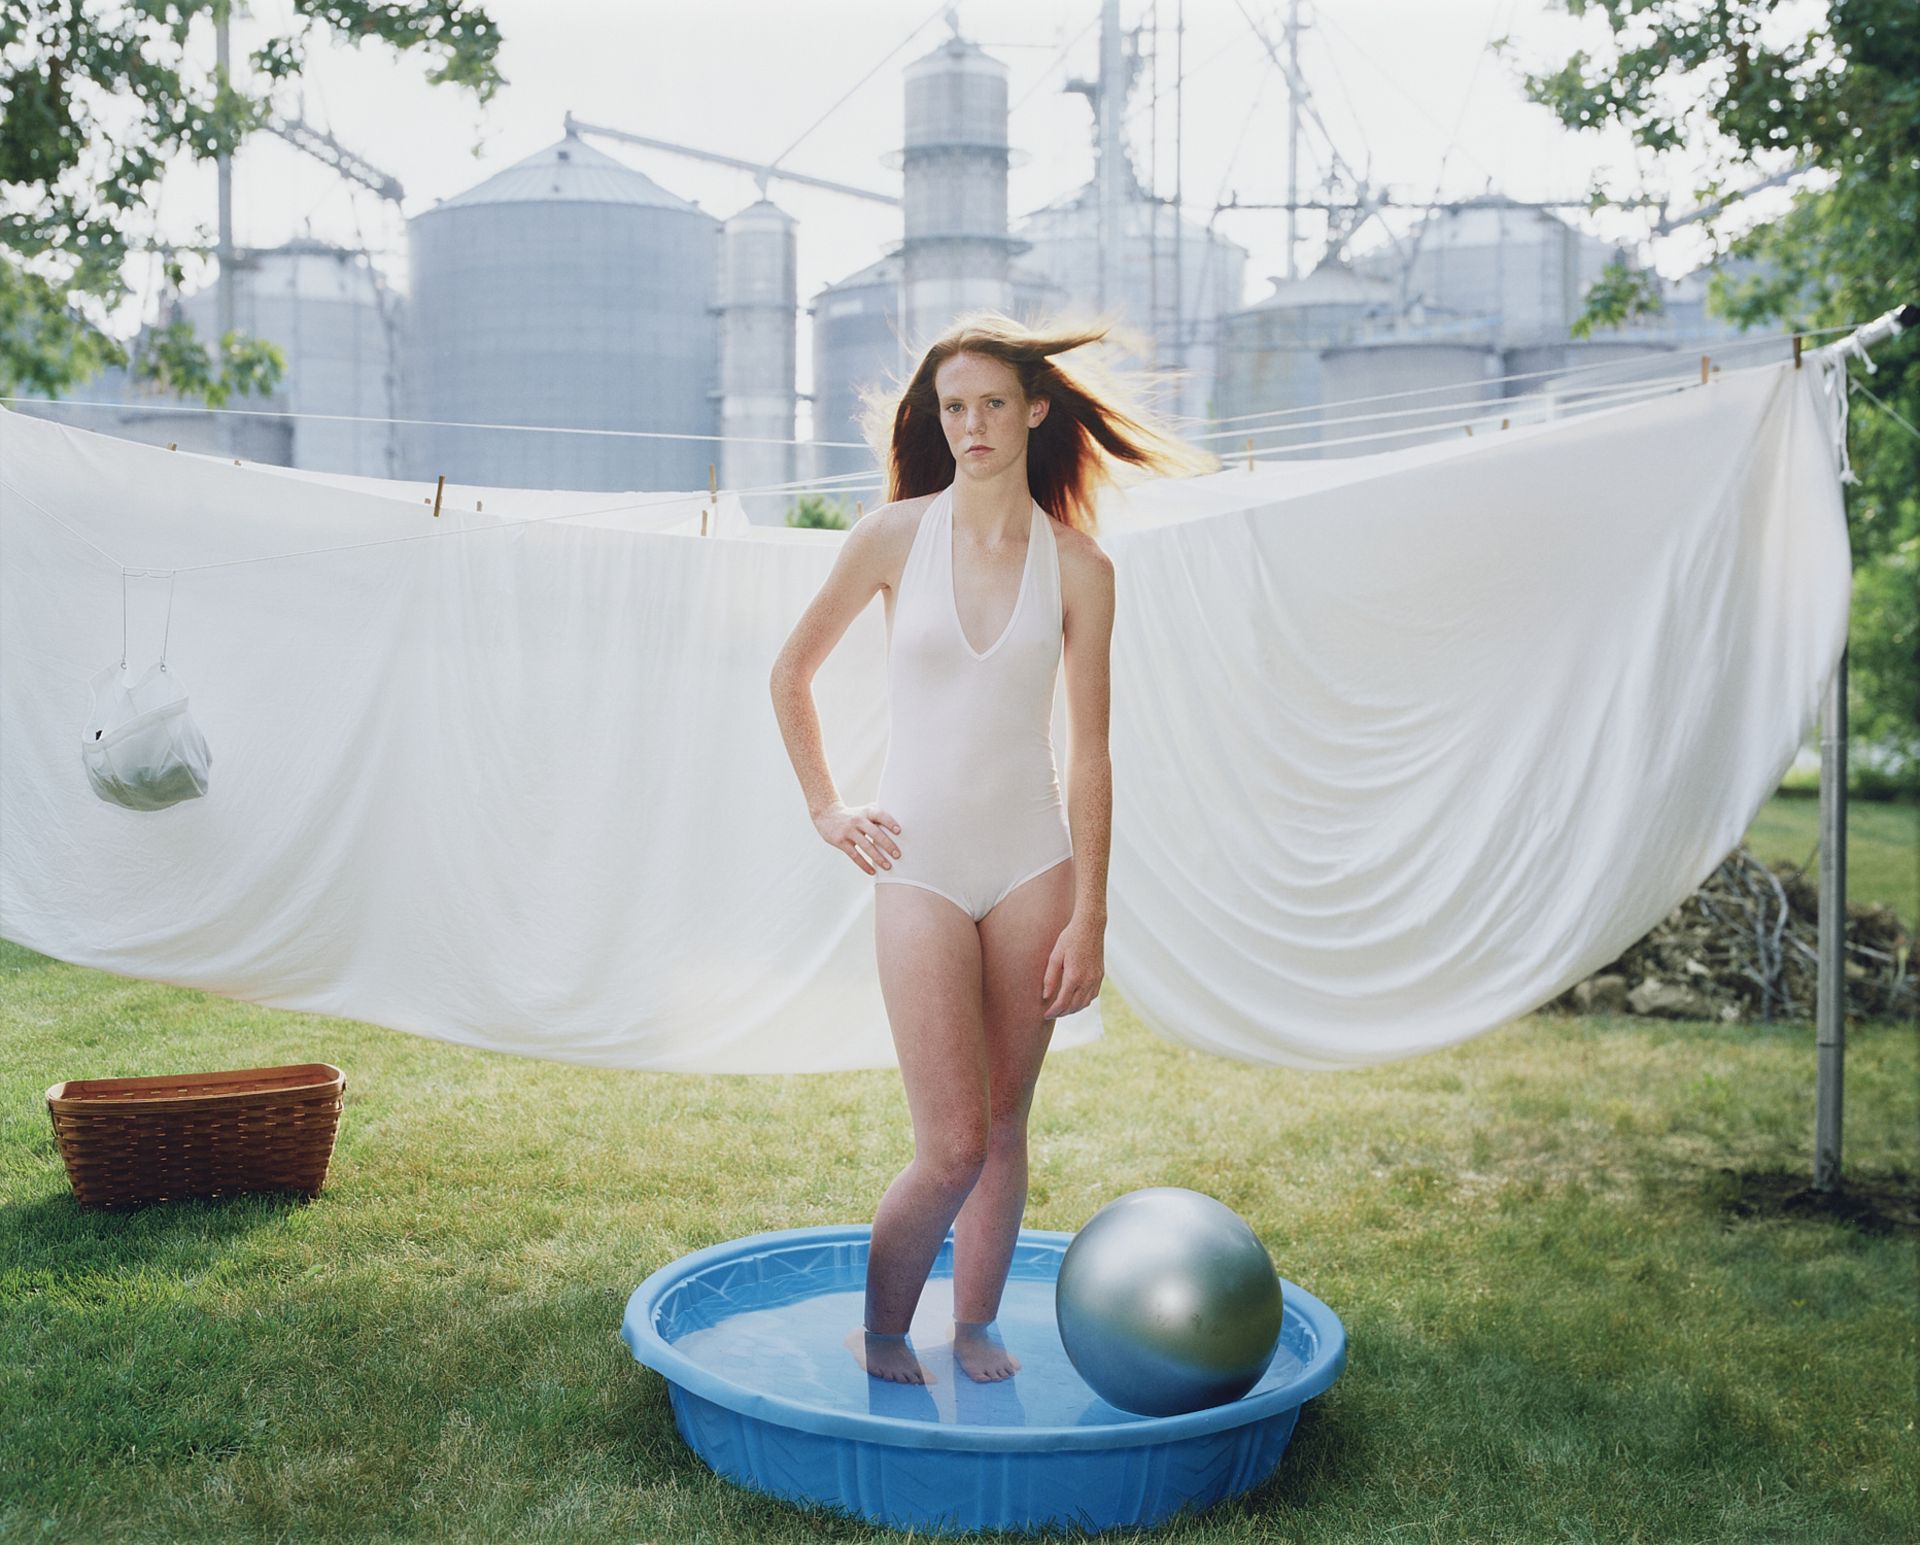 Angela Strassheim "Alicia in the Pool" C-Print